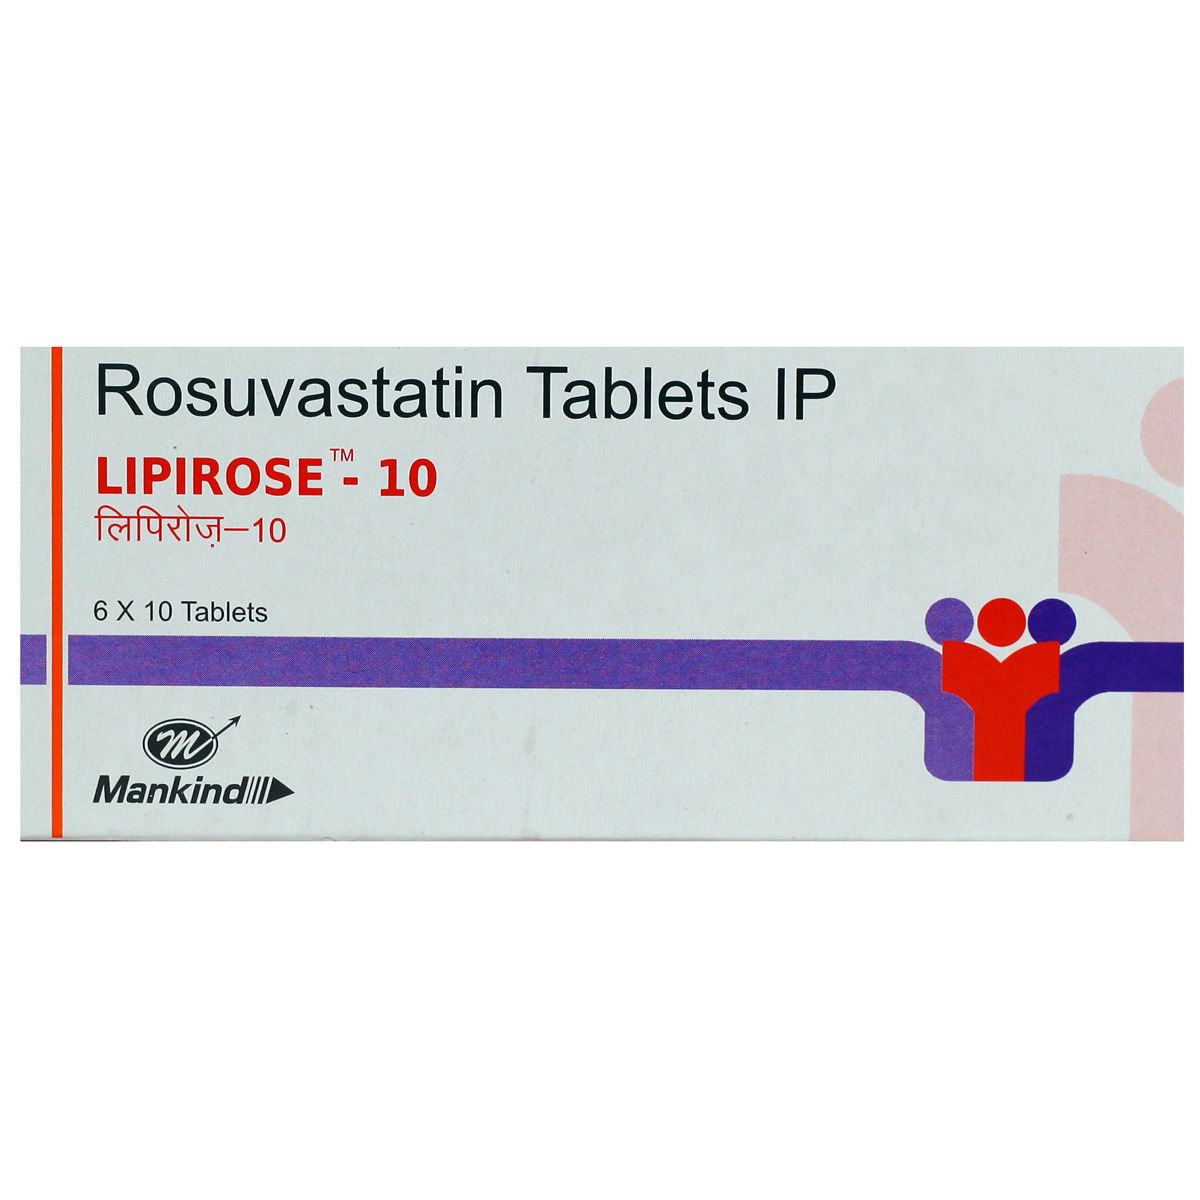 Lipirose-10 Tablet 10's, Pack of 10 TABLETS